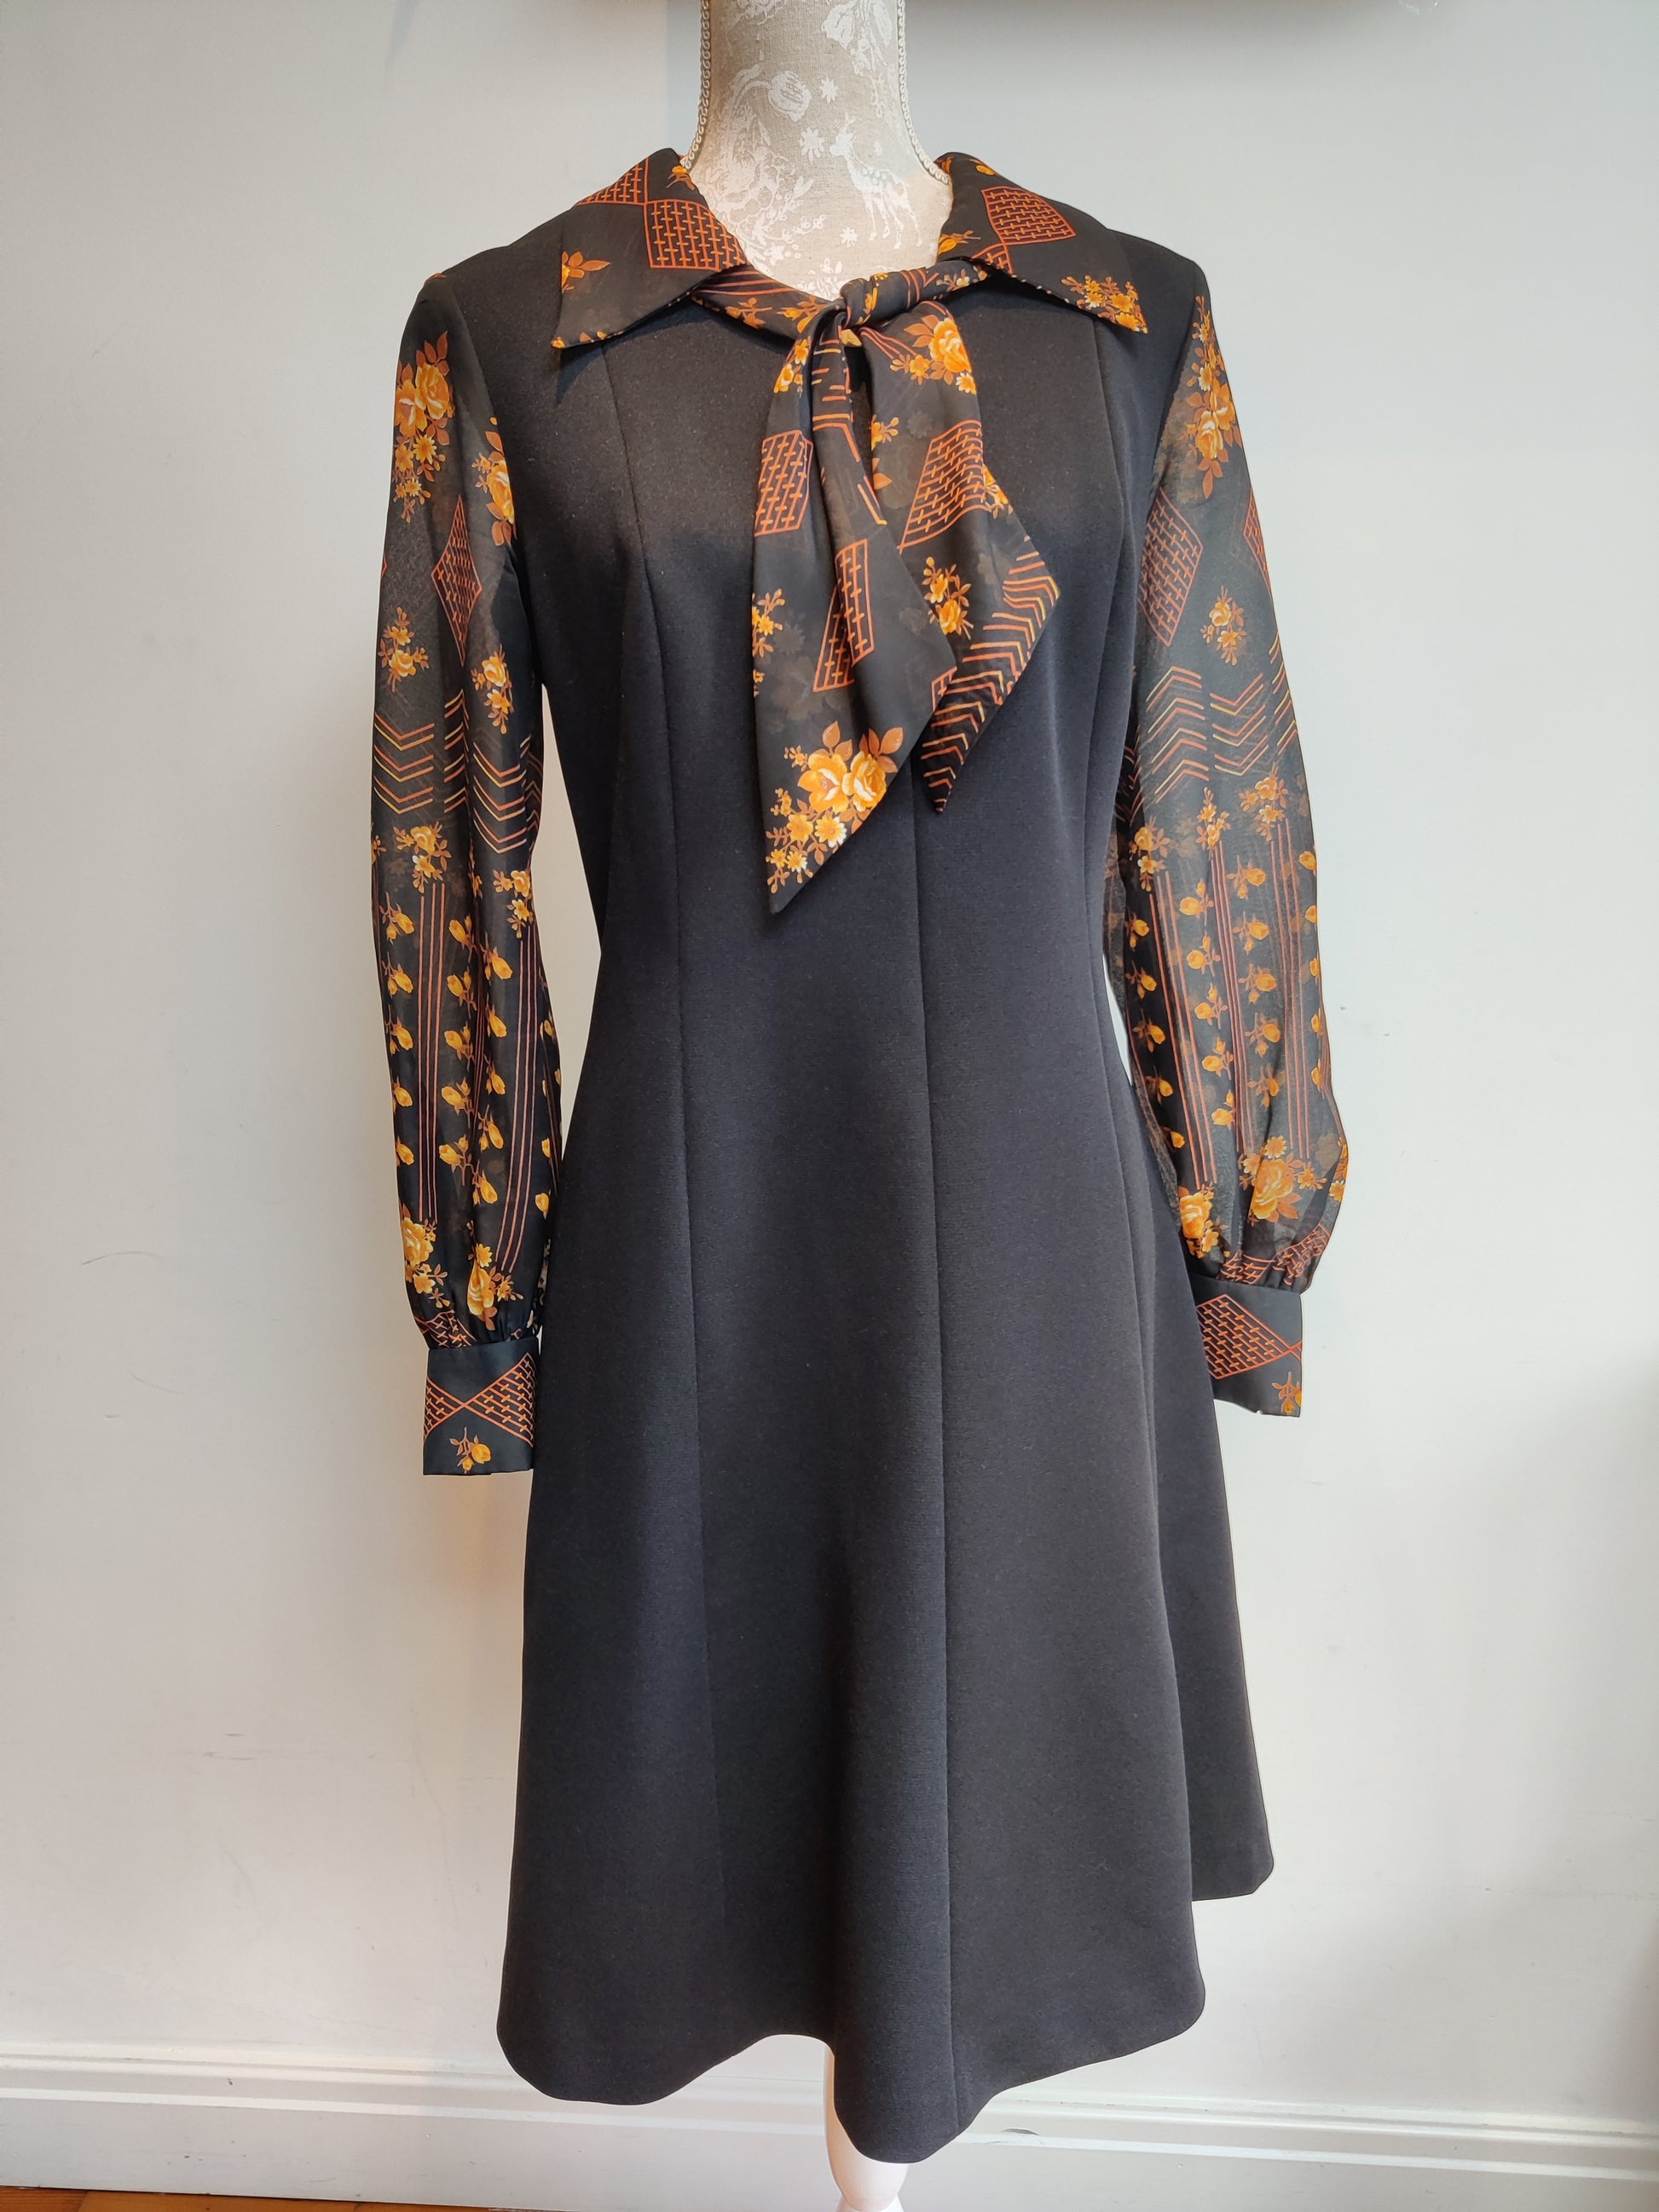 Black and orange vintage dress with dagger collar